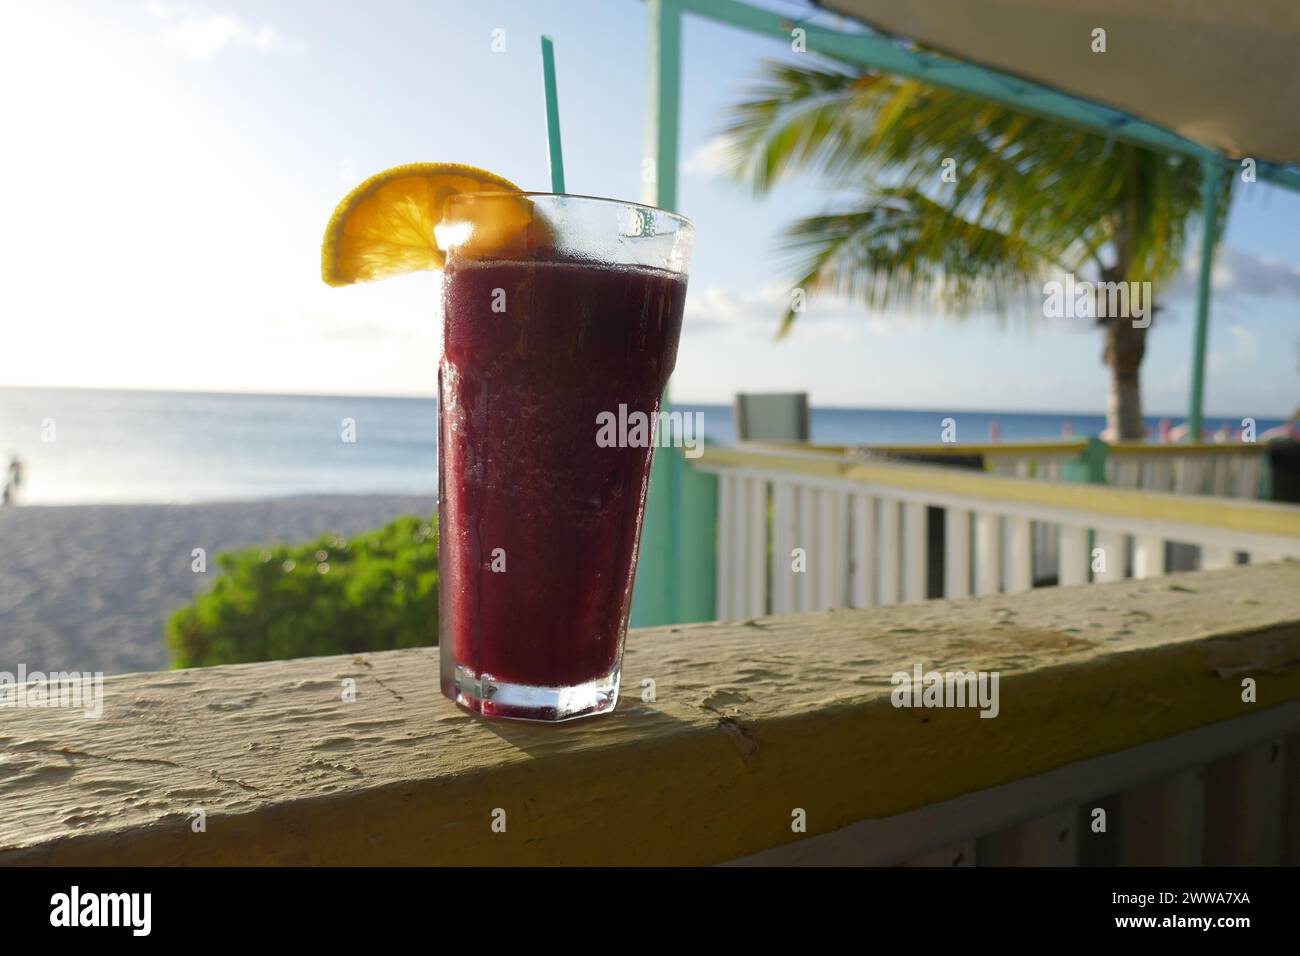 Tropical frozen drink with orange slice and ocean beach scene in background Stock Photo